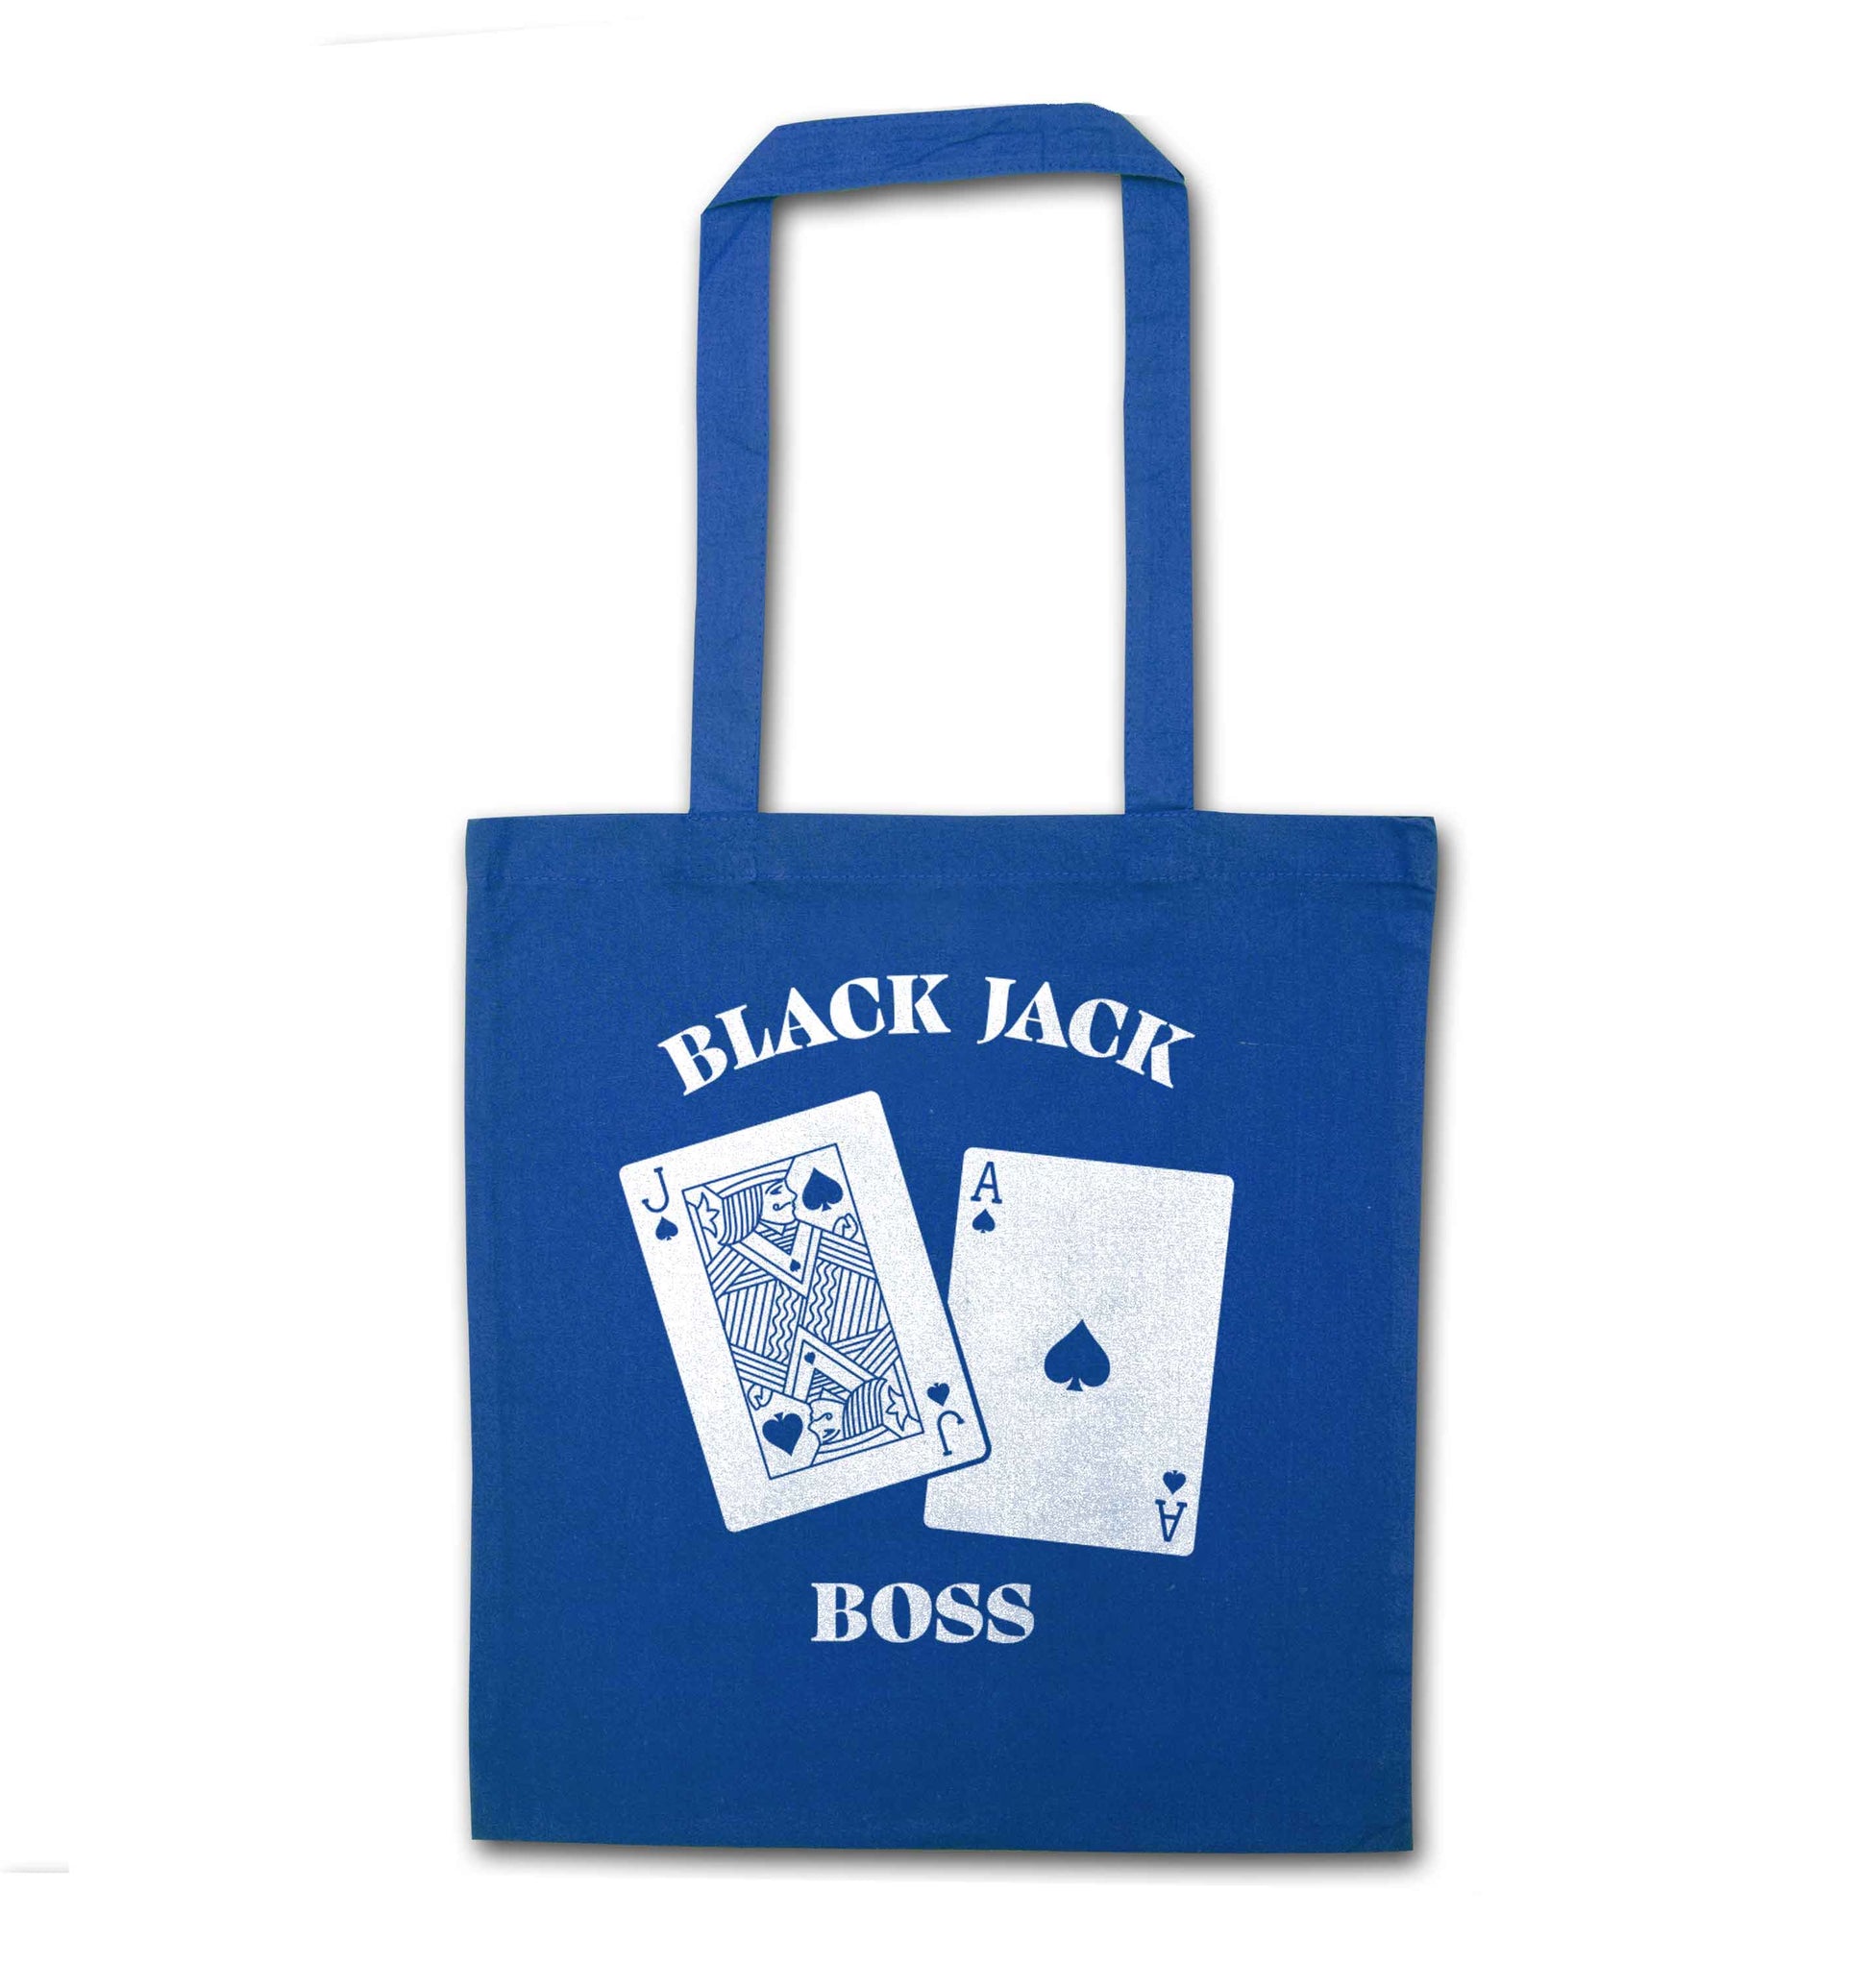 Blackjack boss blue tote bag